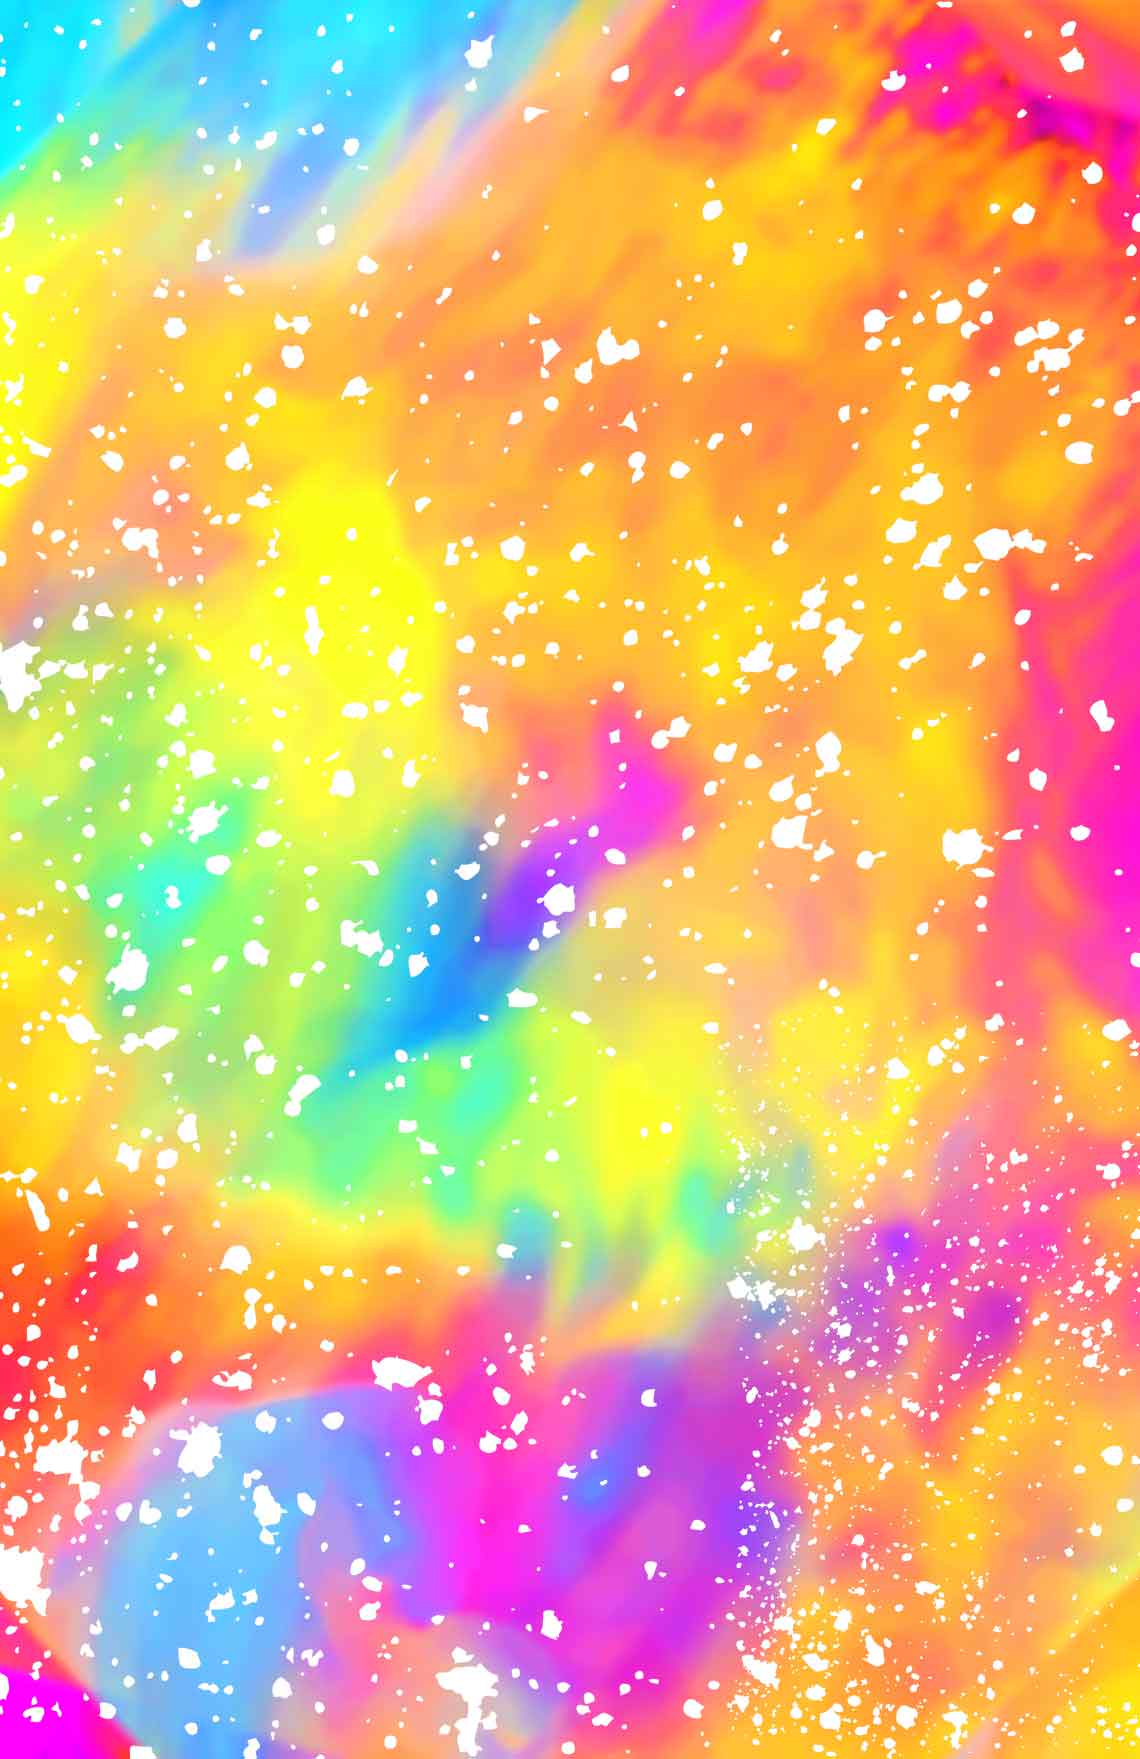 FREE Download! Lisa Frank Inspired Tie Dye Phone Wallpaper, Do It